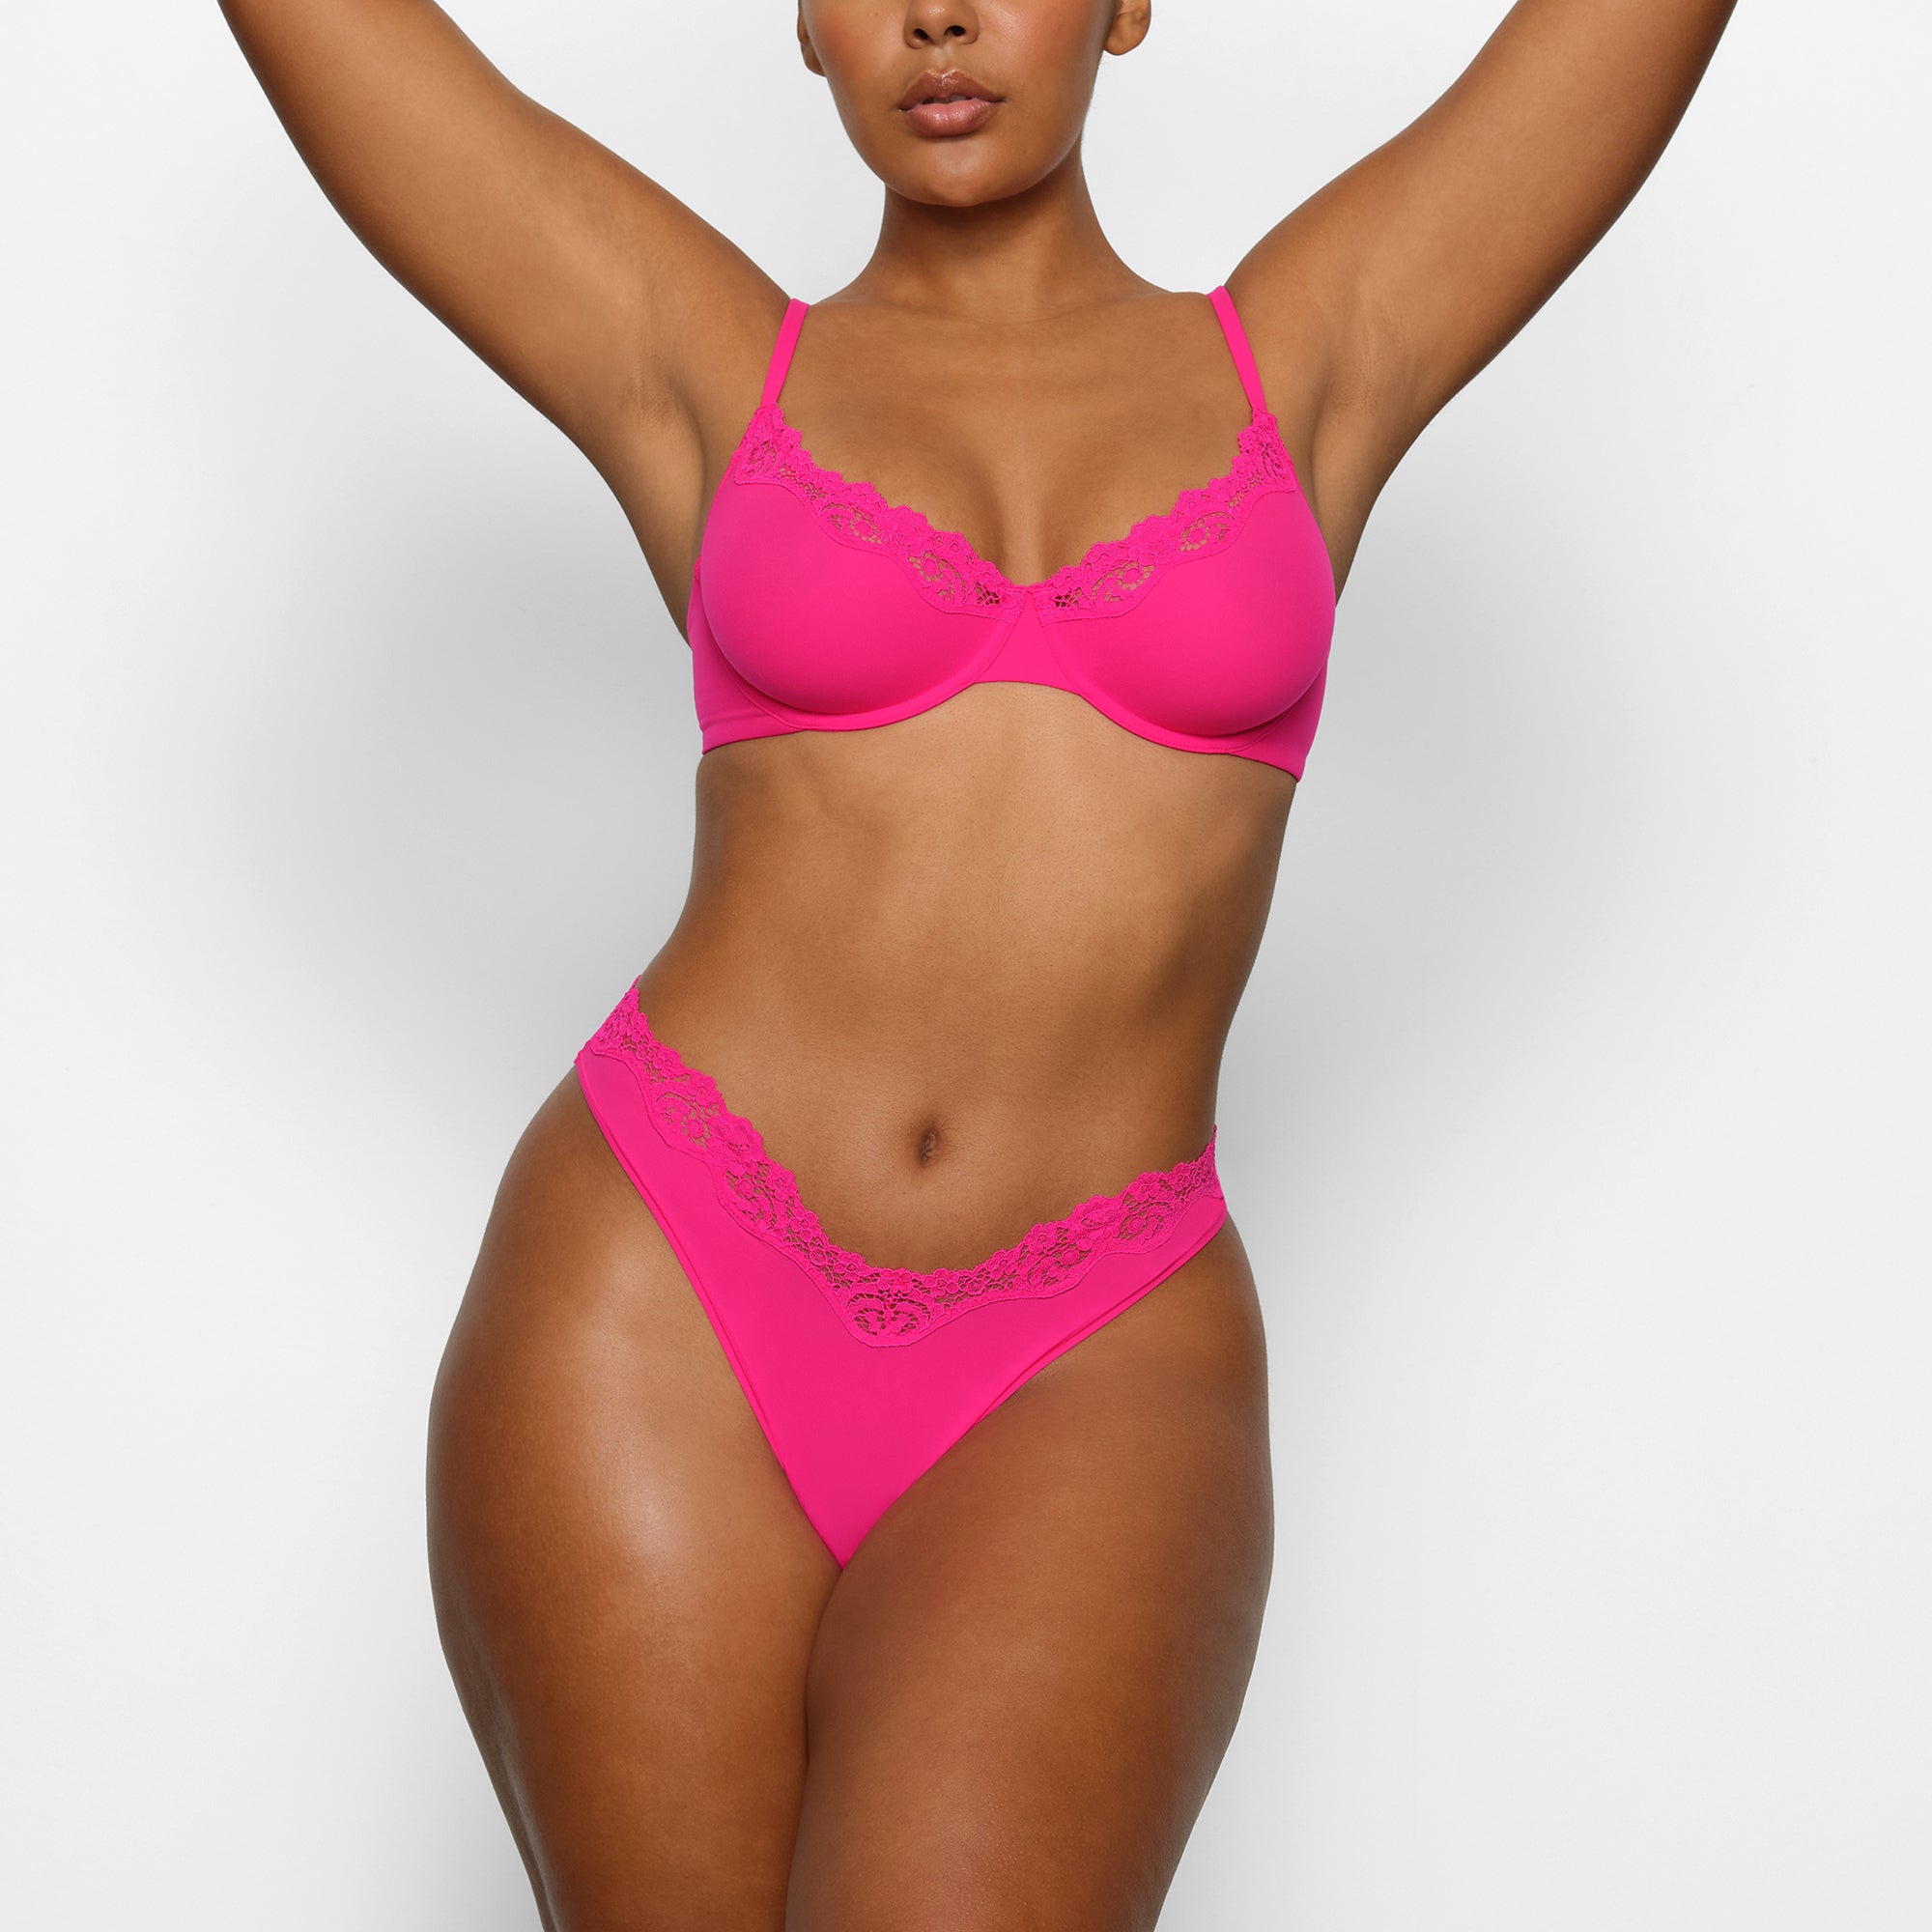 SKIMS Pink Cotton Jersey Underwire Bra Size 26 C - $28 New With